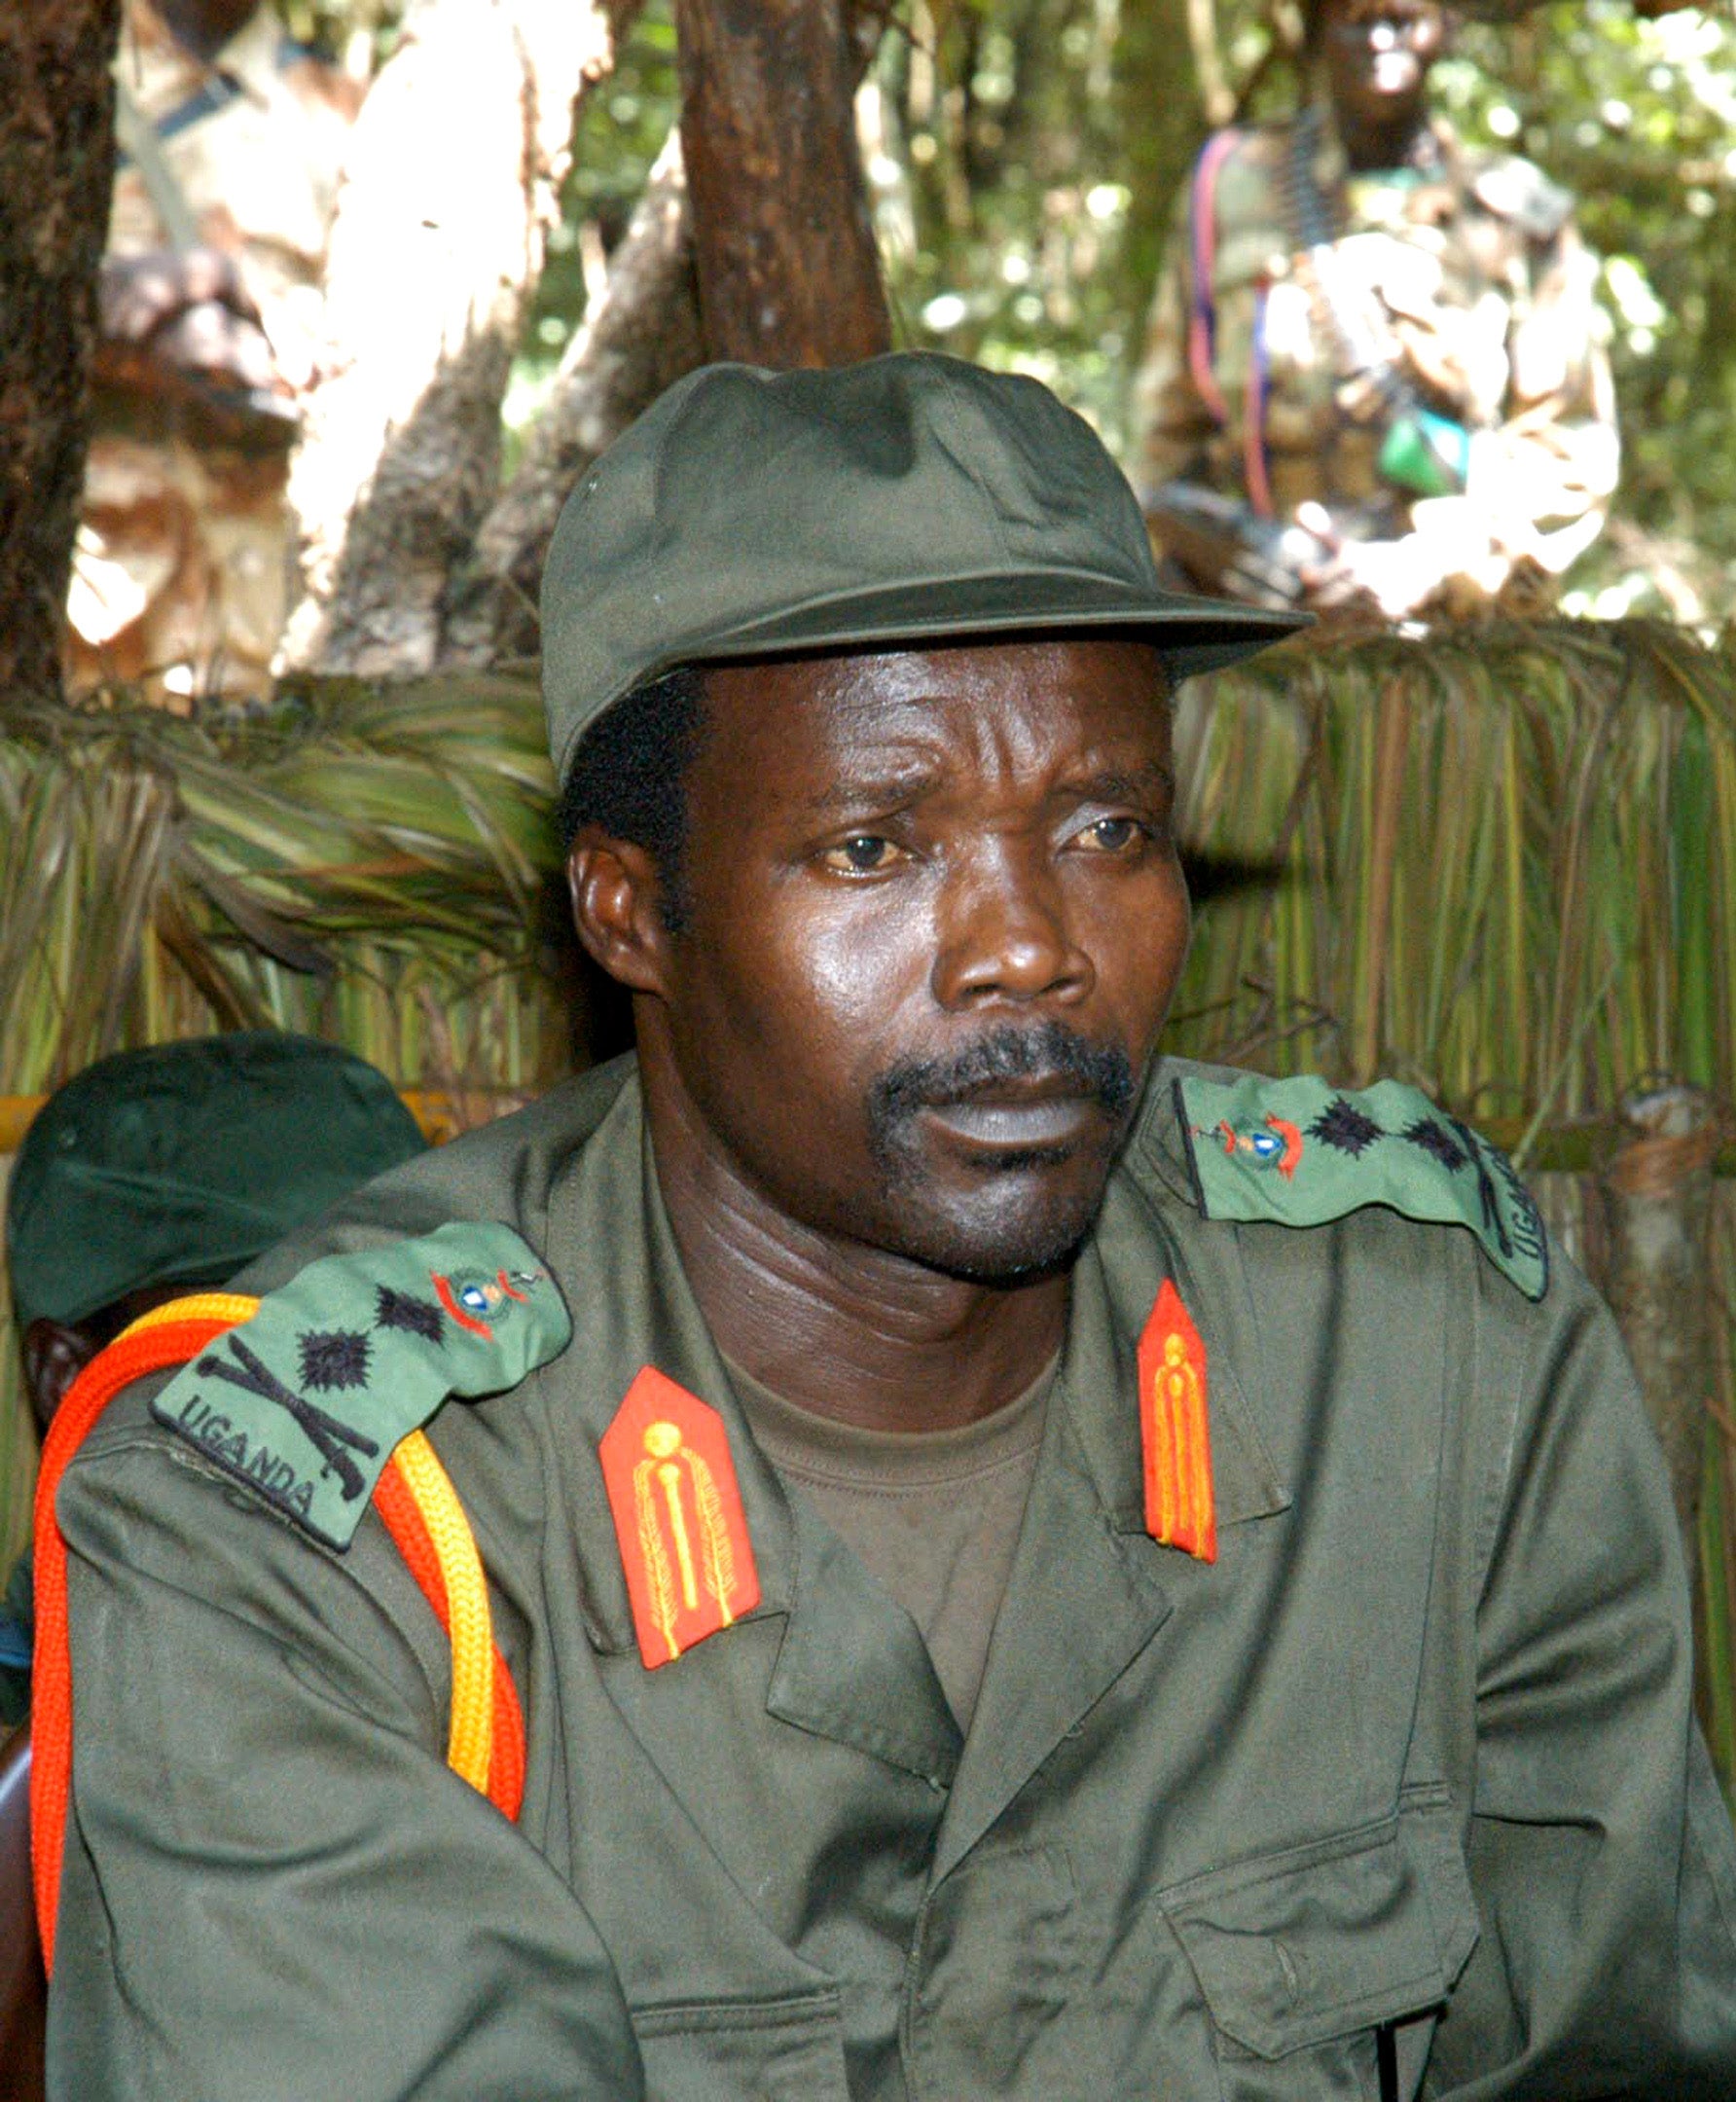 Can You Help #StopKony?